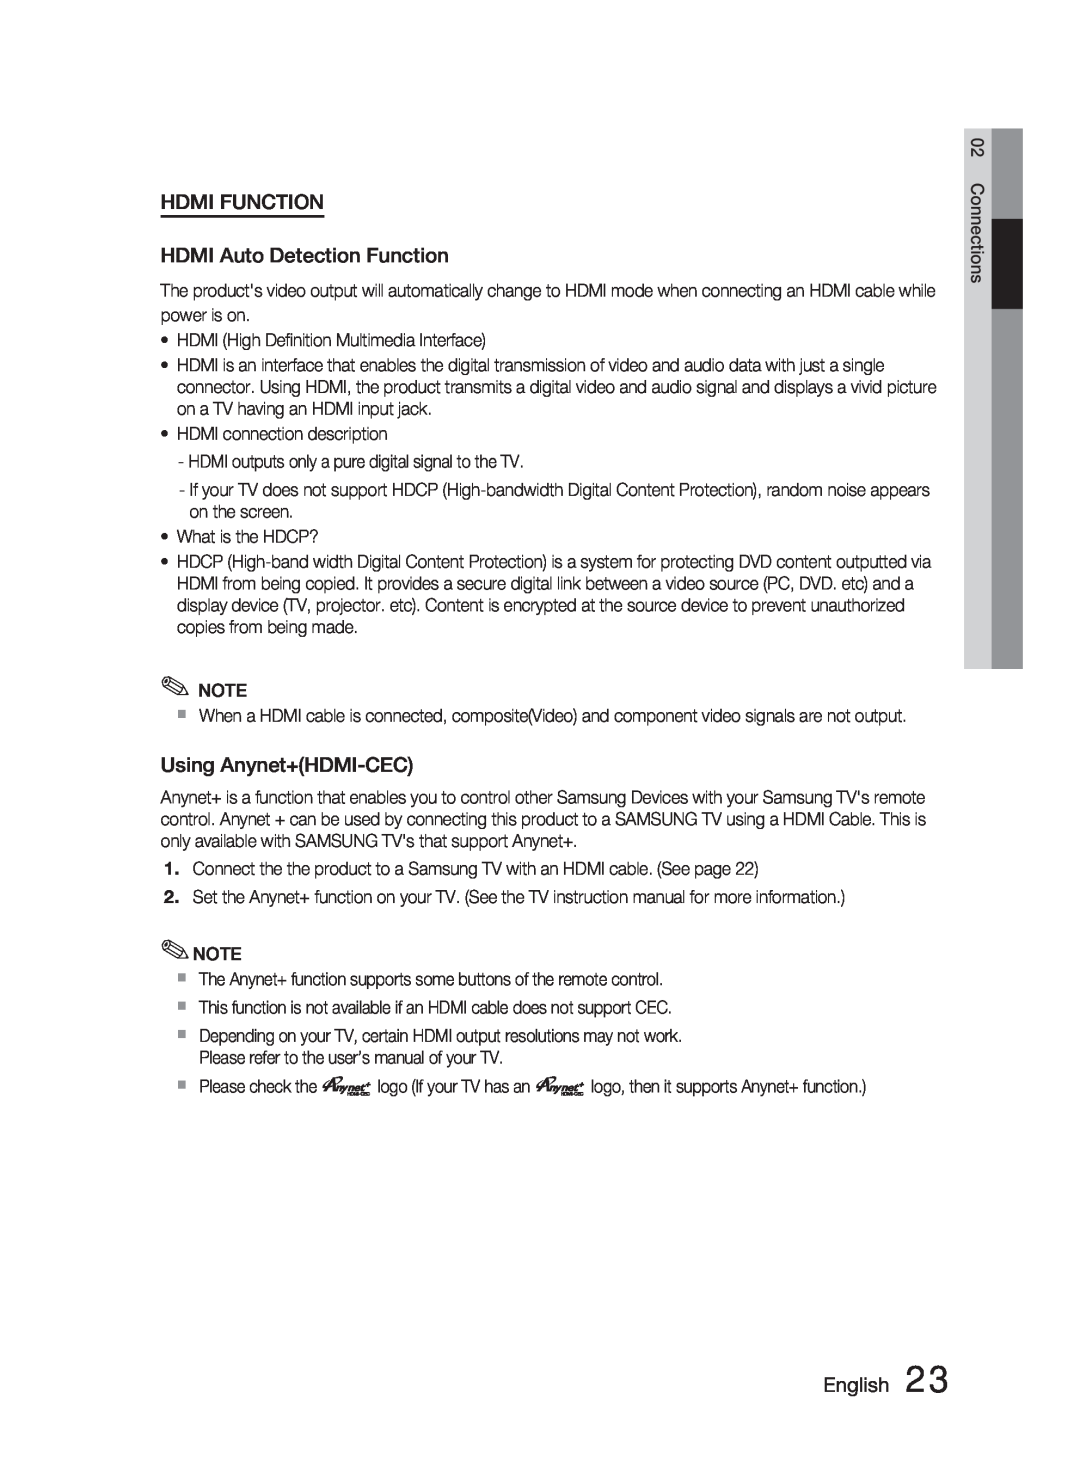 Samsung HT-C550-XAC user manual HDMI FUNCTION HDMI Auto Detection Function, Using Anynet+HDMI-CEC, English 